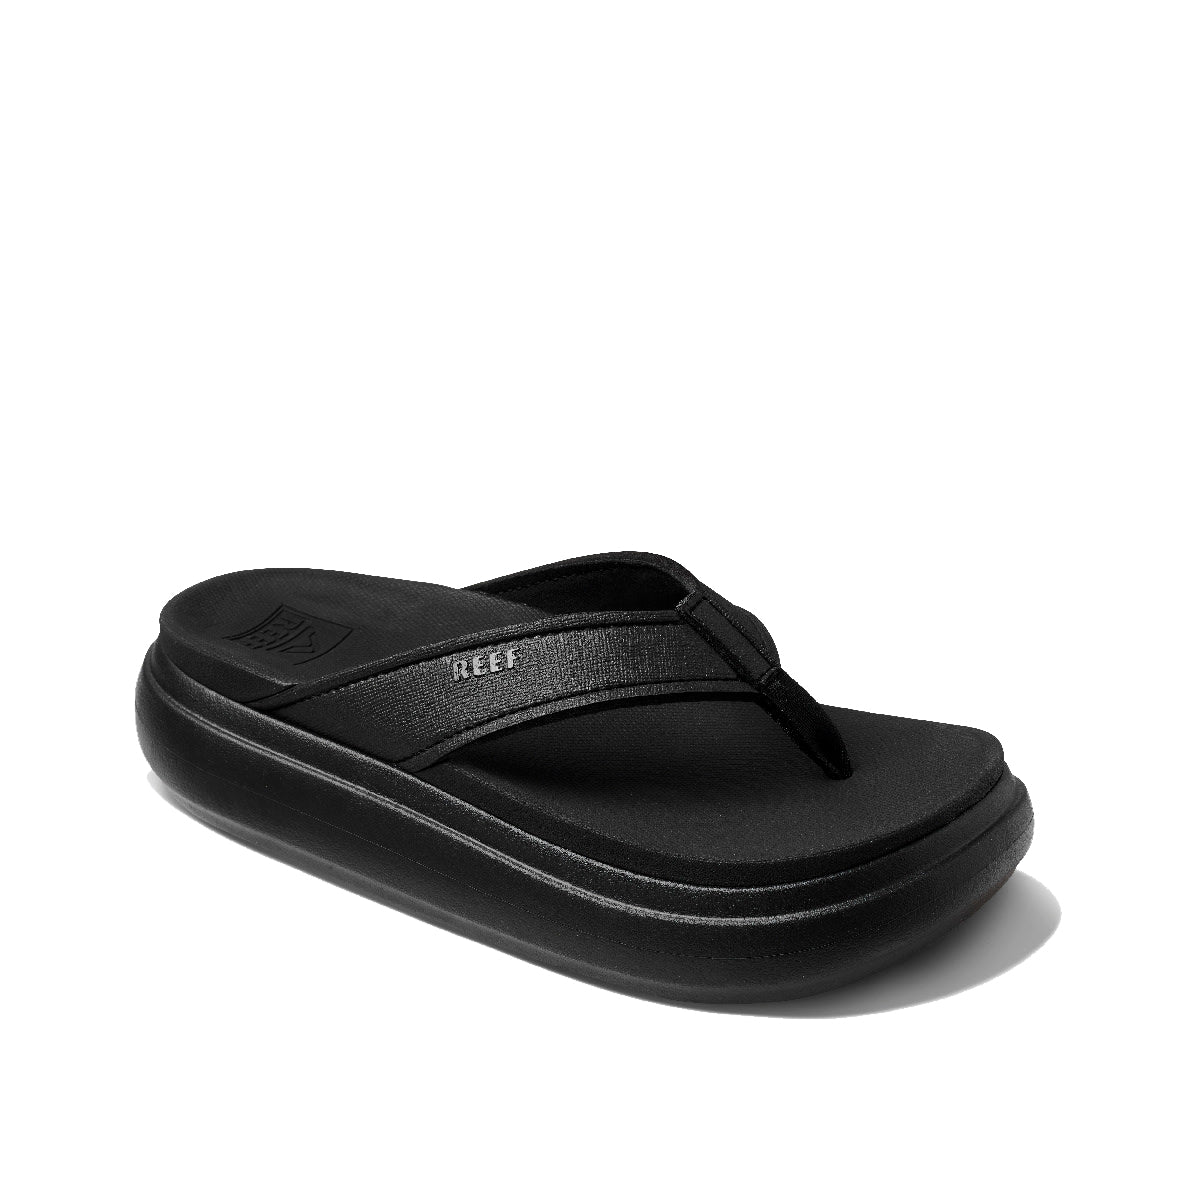 Reef Cushion Bondi Womens Sandals Black-Black 8